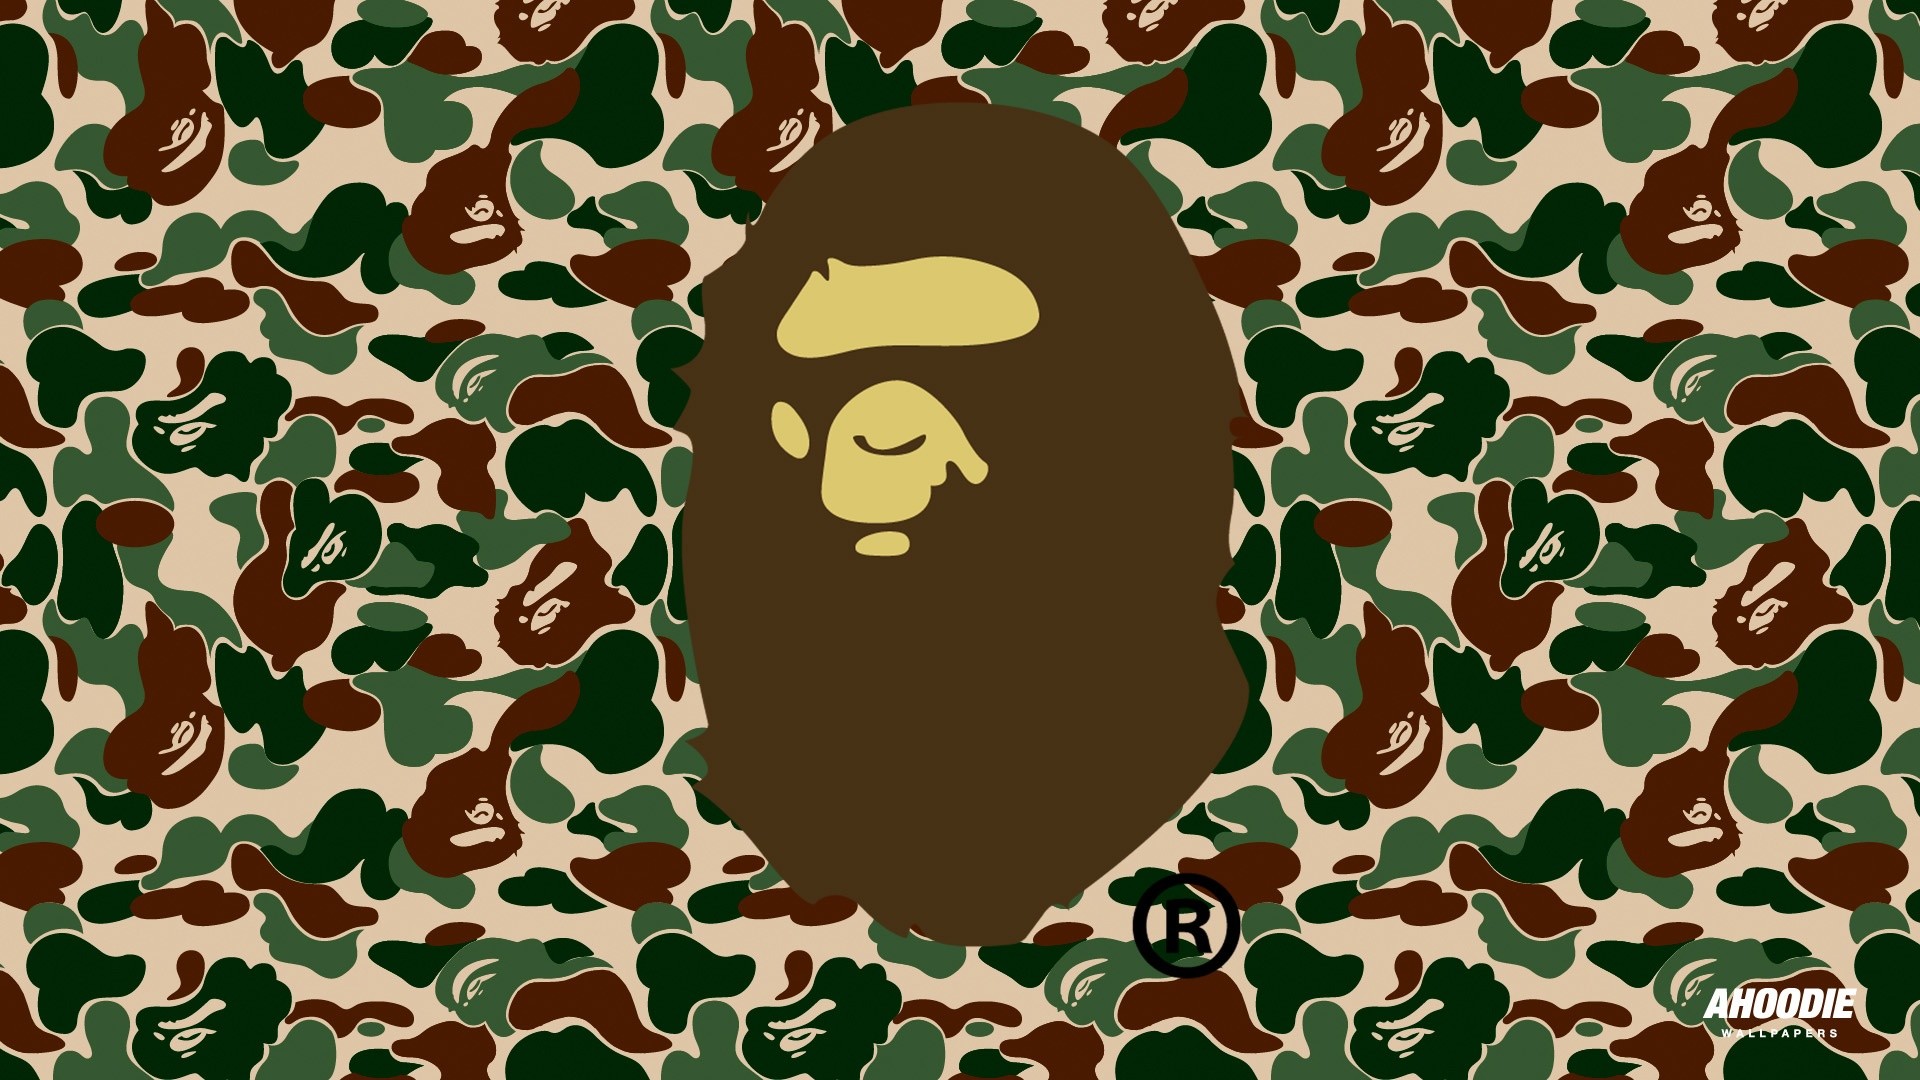 bape wallpaper,military camouflage,pattern,camouflage,design,illustration